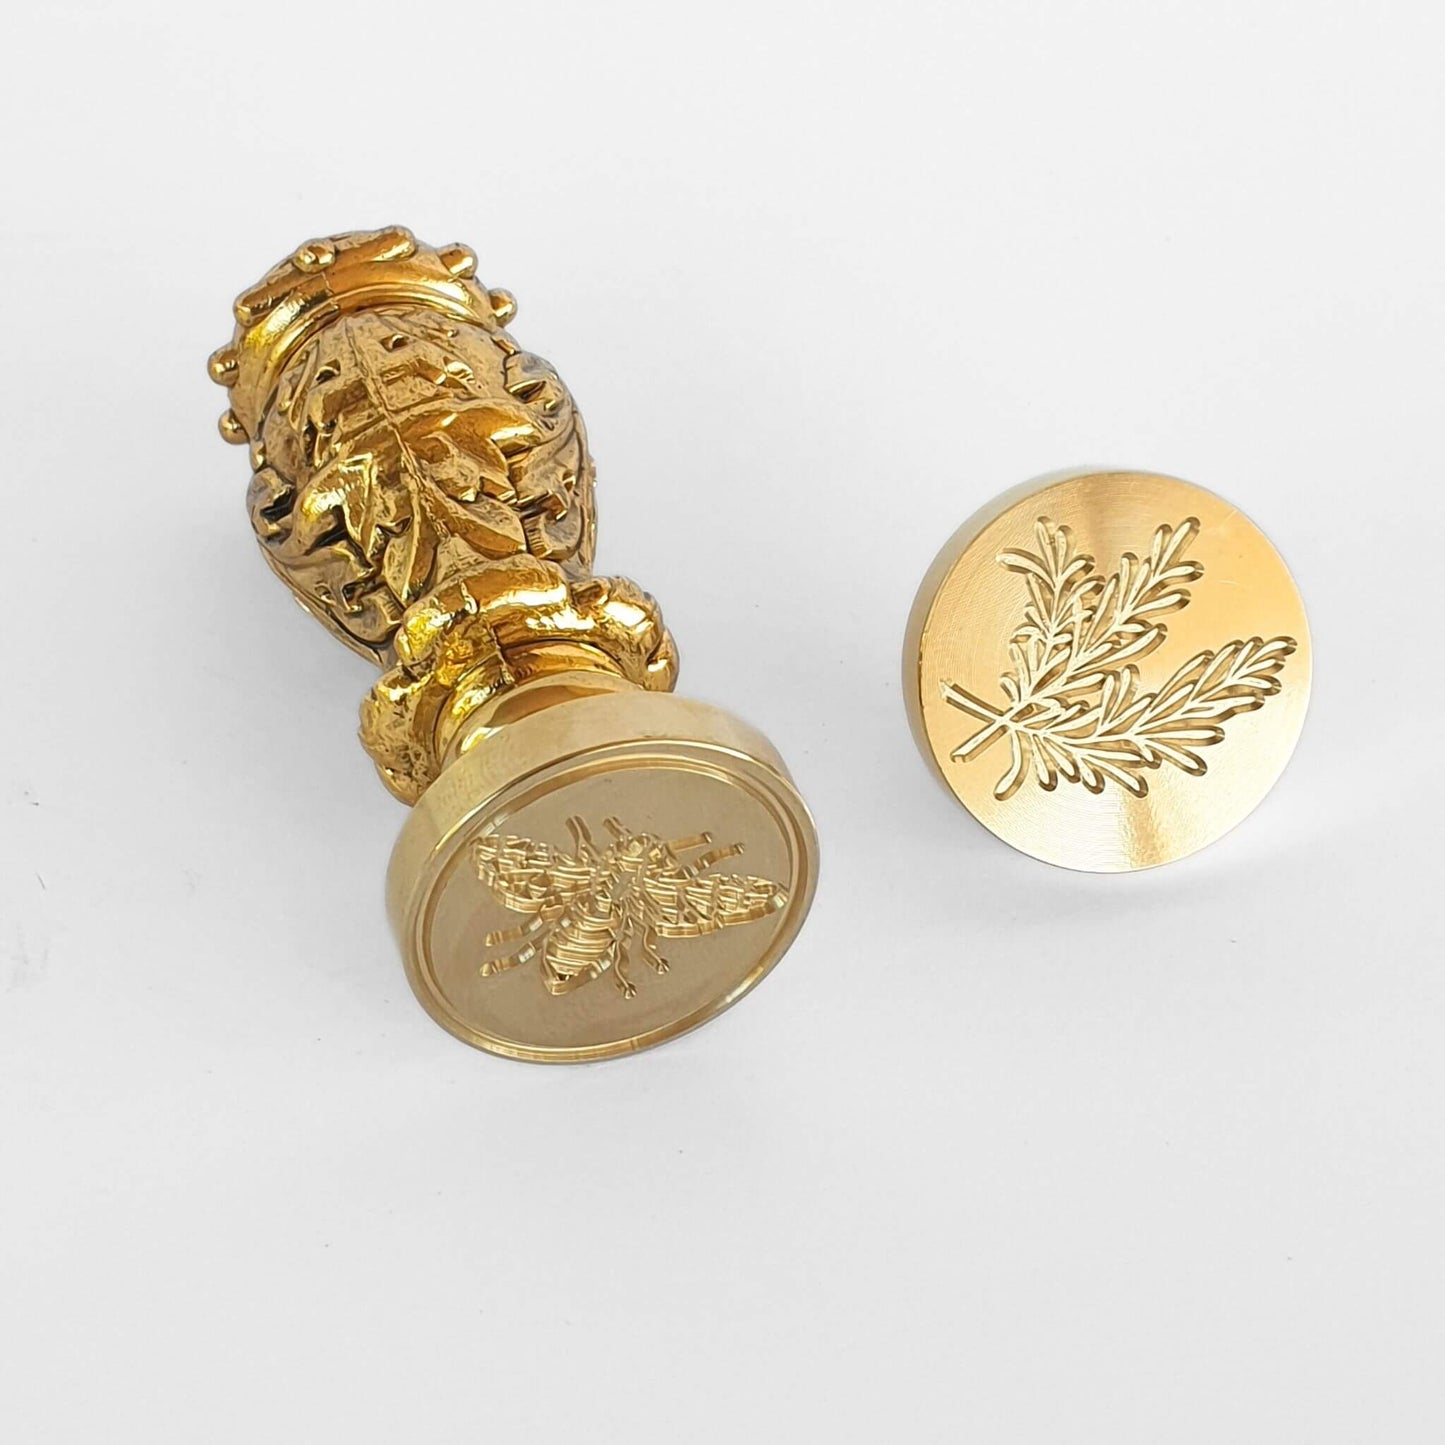 Tuscan wax seal handle in gold with bee wax seal and rosemary foliage wax seal head from Tuscan Wax Seal Kit